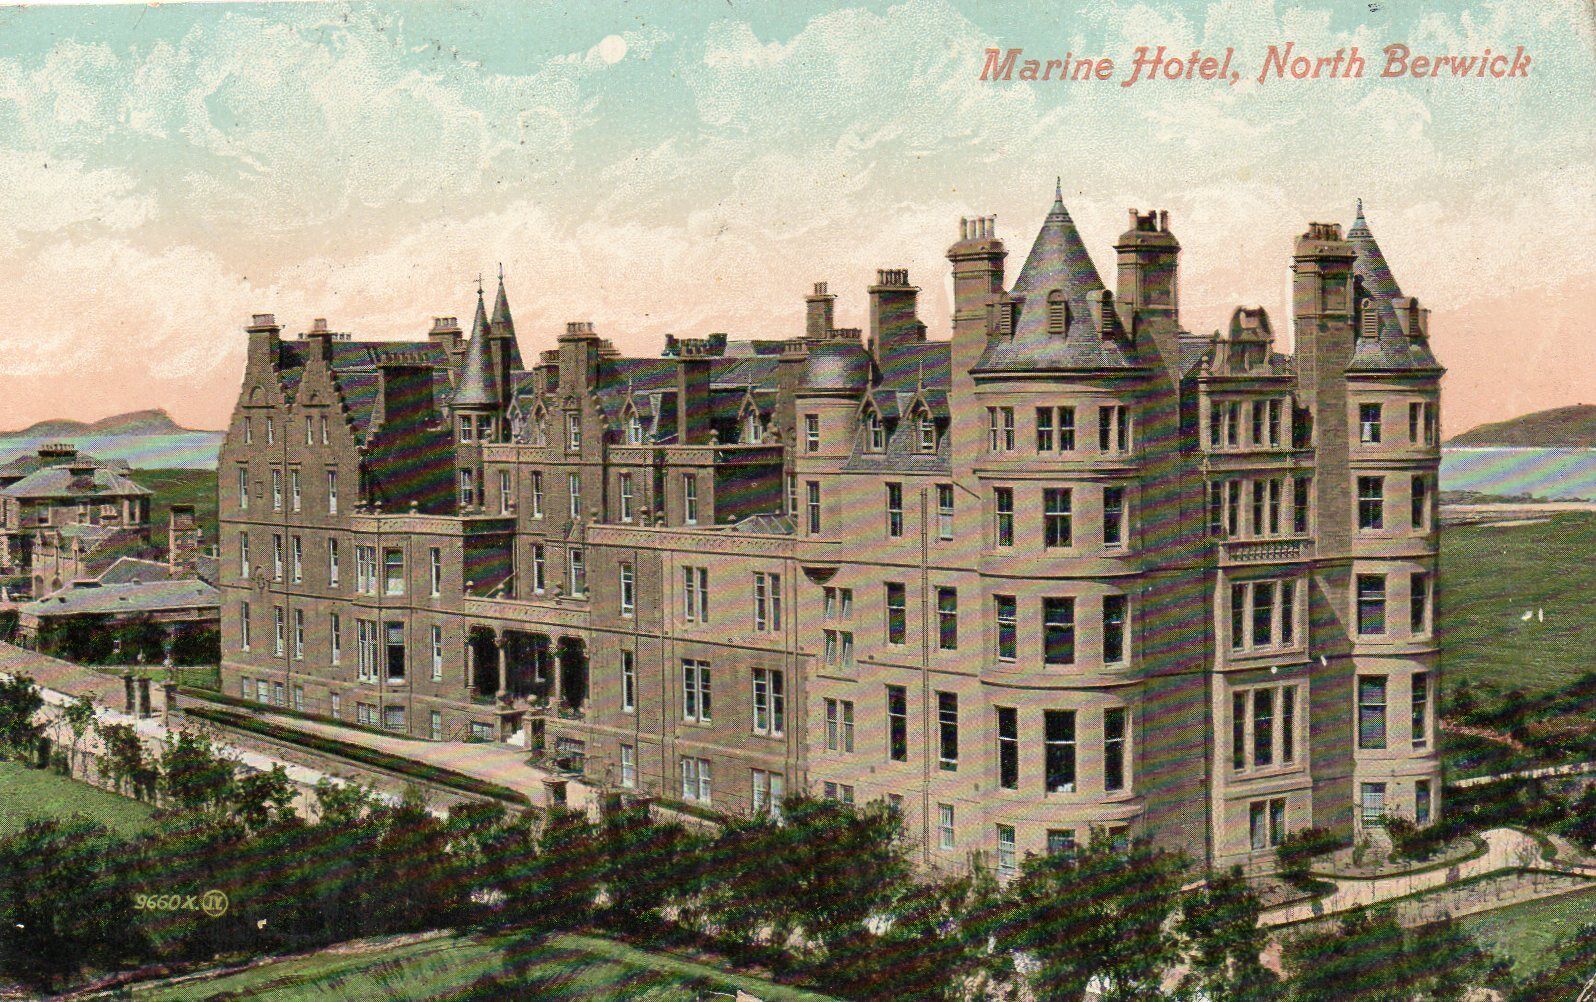 service of Marine Hotel, North Berwick, East Lothian, 1908 postmark